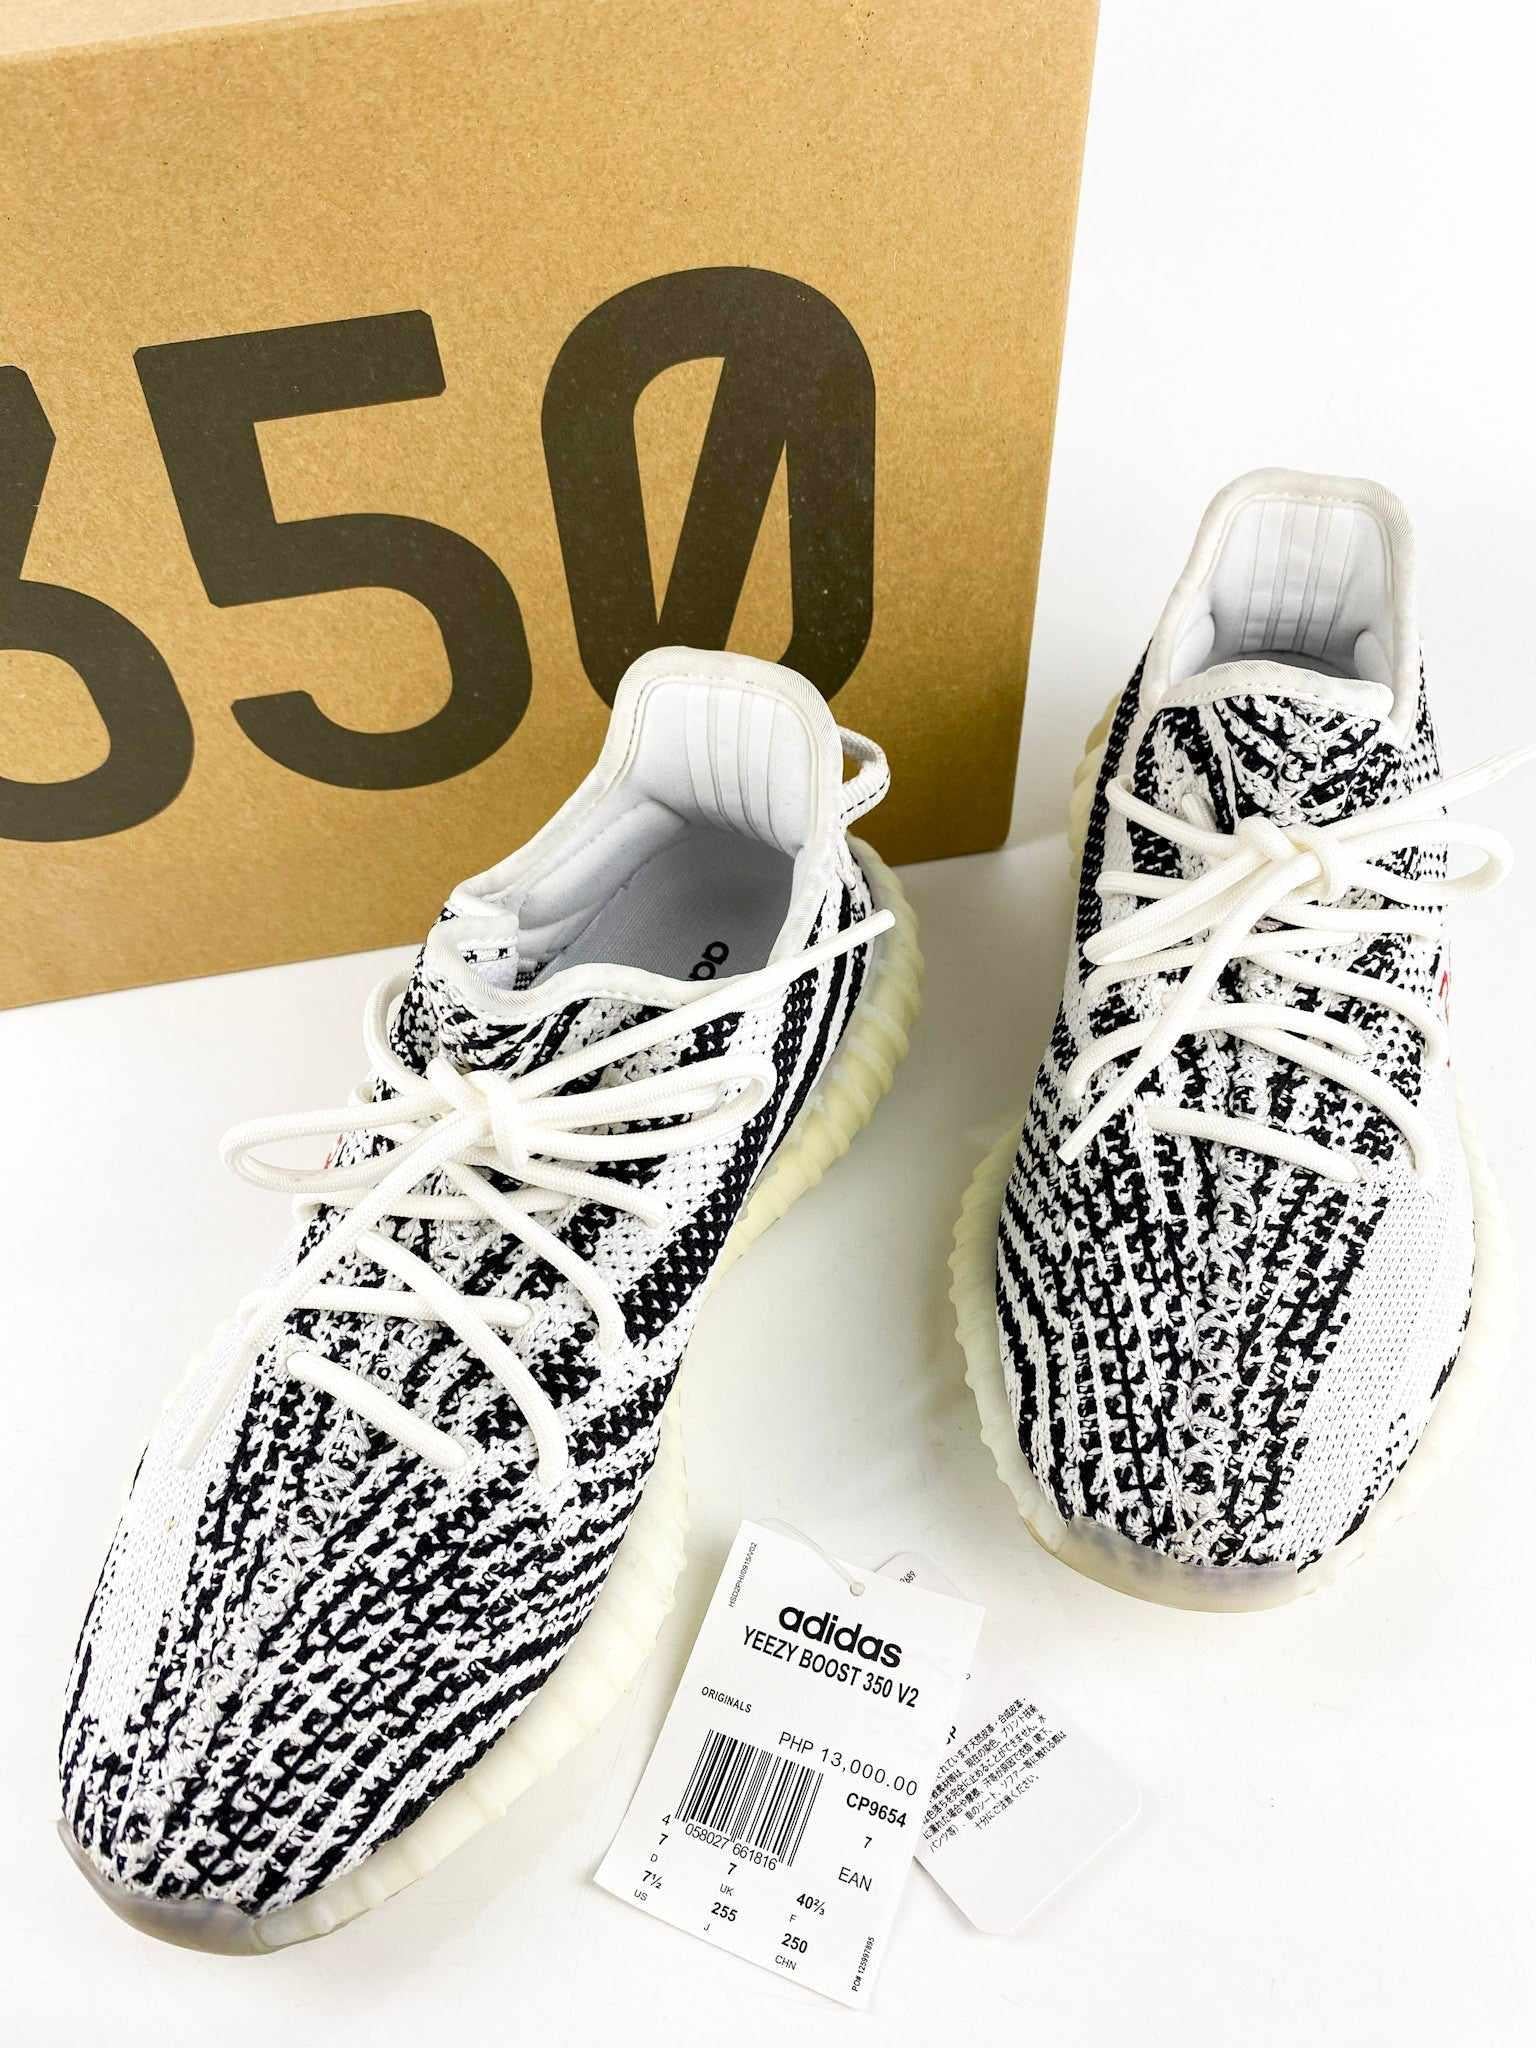 Adidas Yeezy Boost 350 zebra V2 Size 7 1/2 US Men's